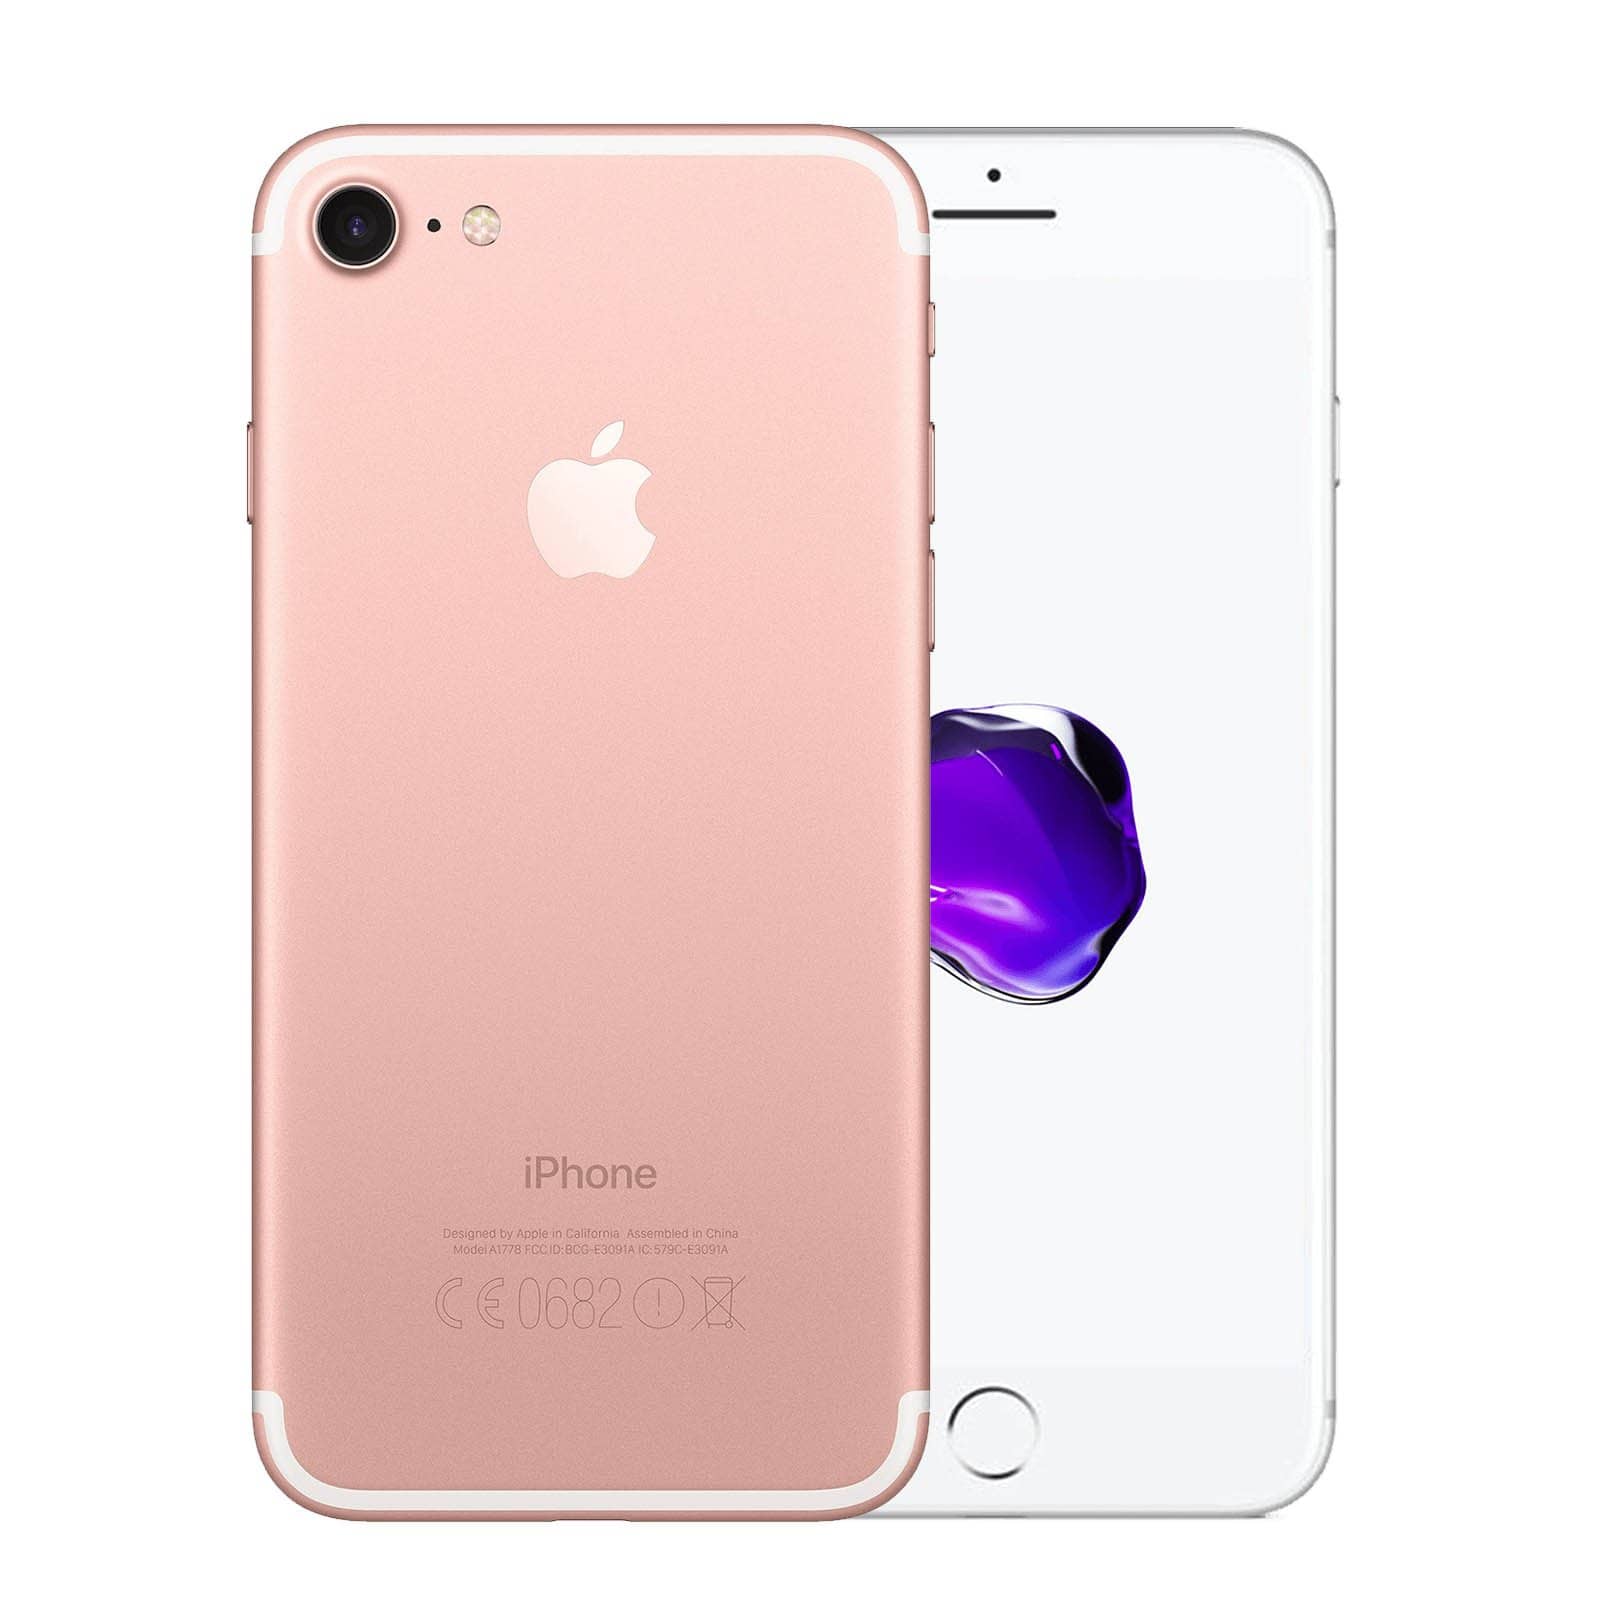 Apple iPhone 7 256GB Rose Gold Fair - Unlocked 256GB Rose Gold Fair